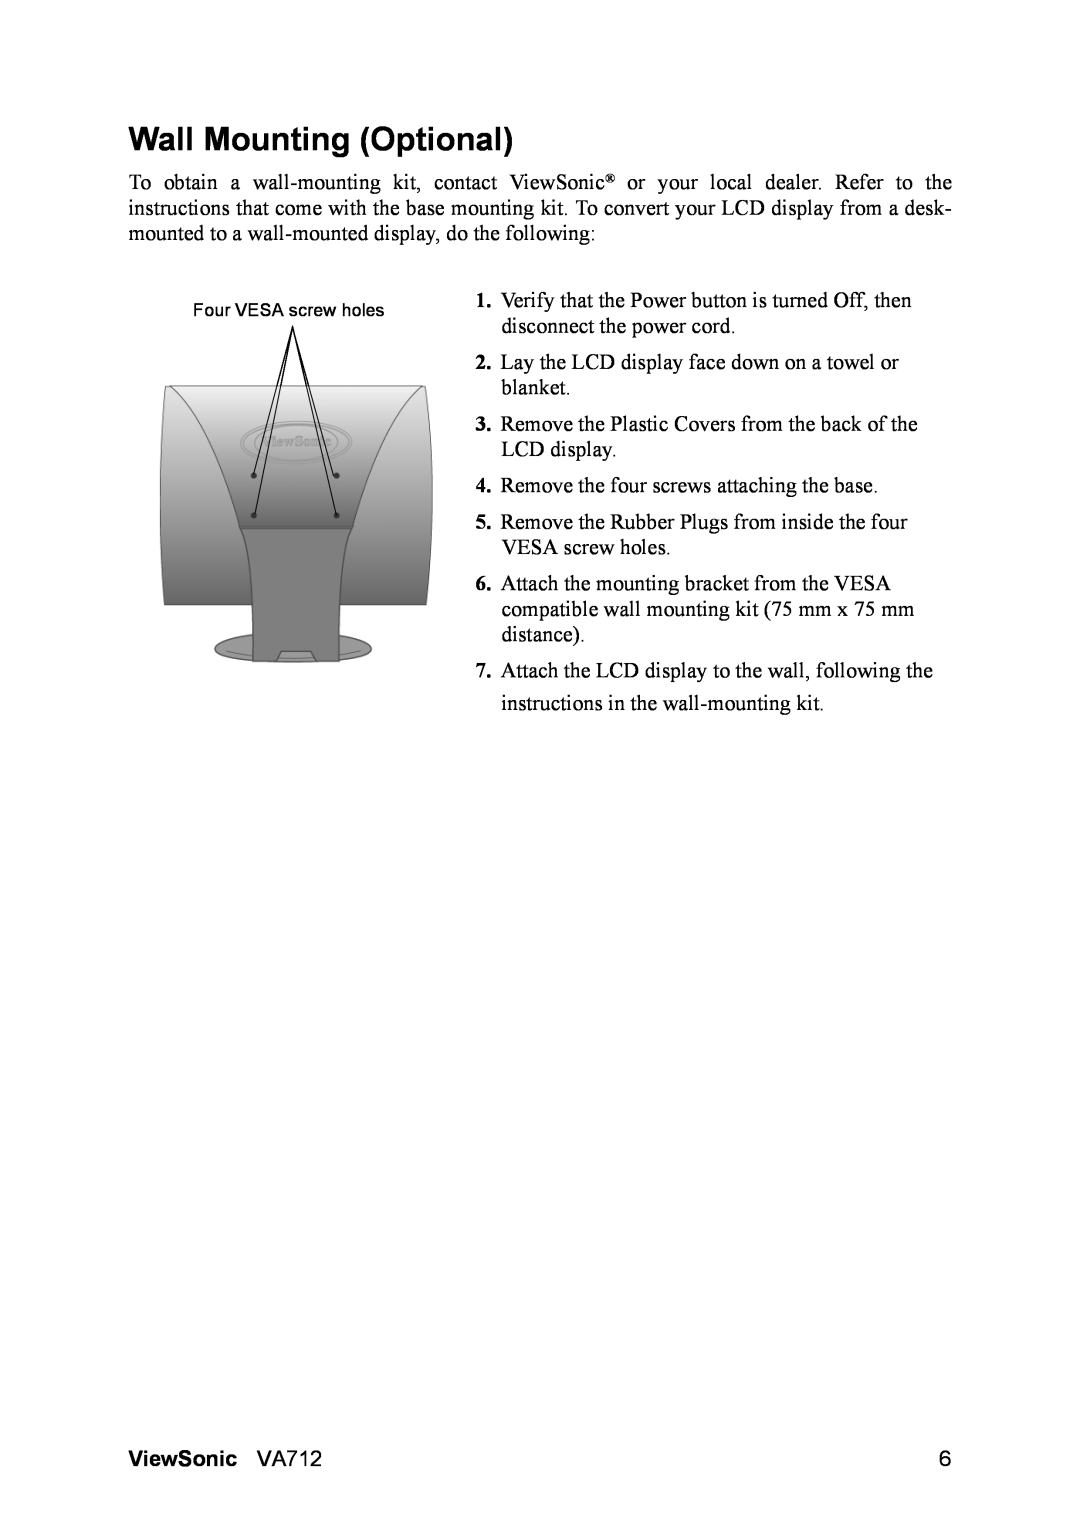 ViewSonic manual Wall Mounting Optional, ViewSonic VA712 